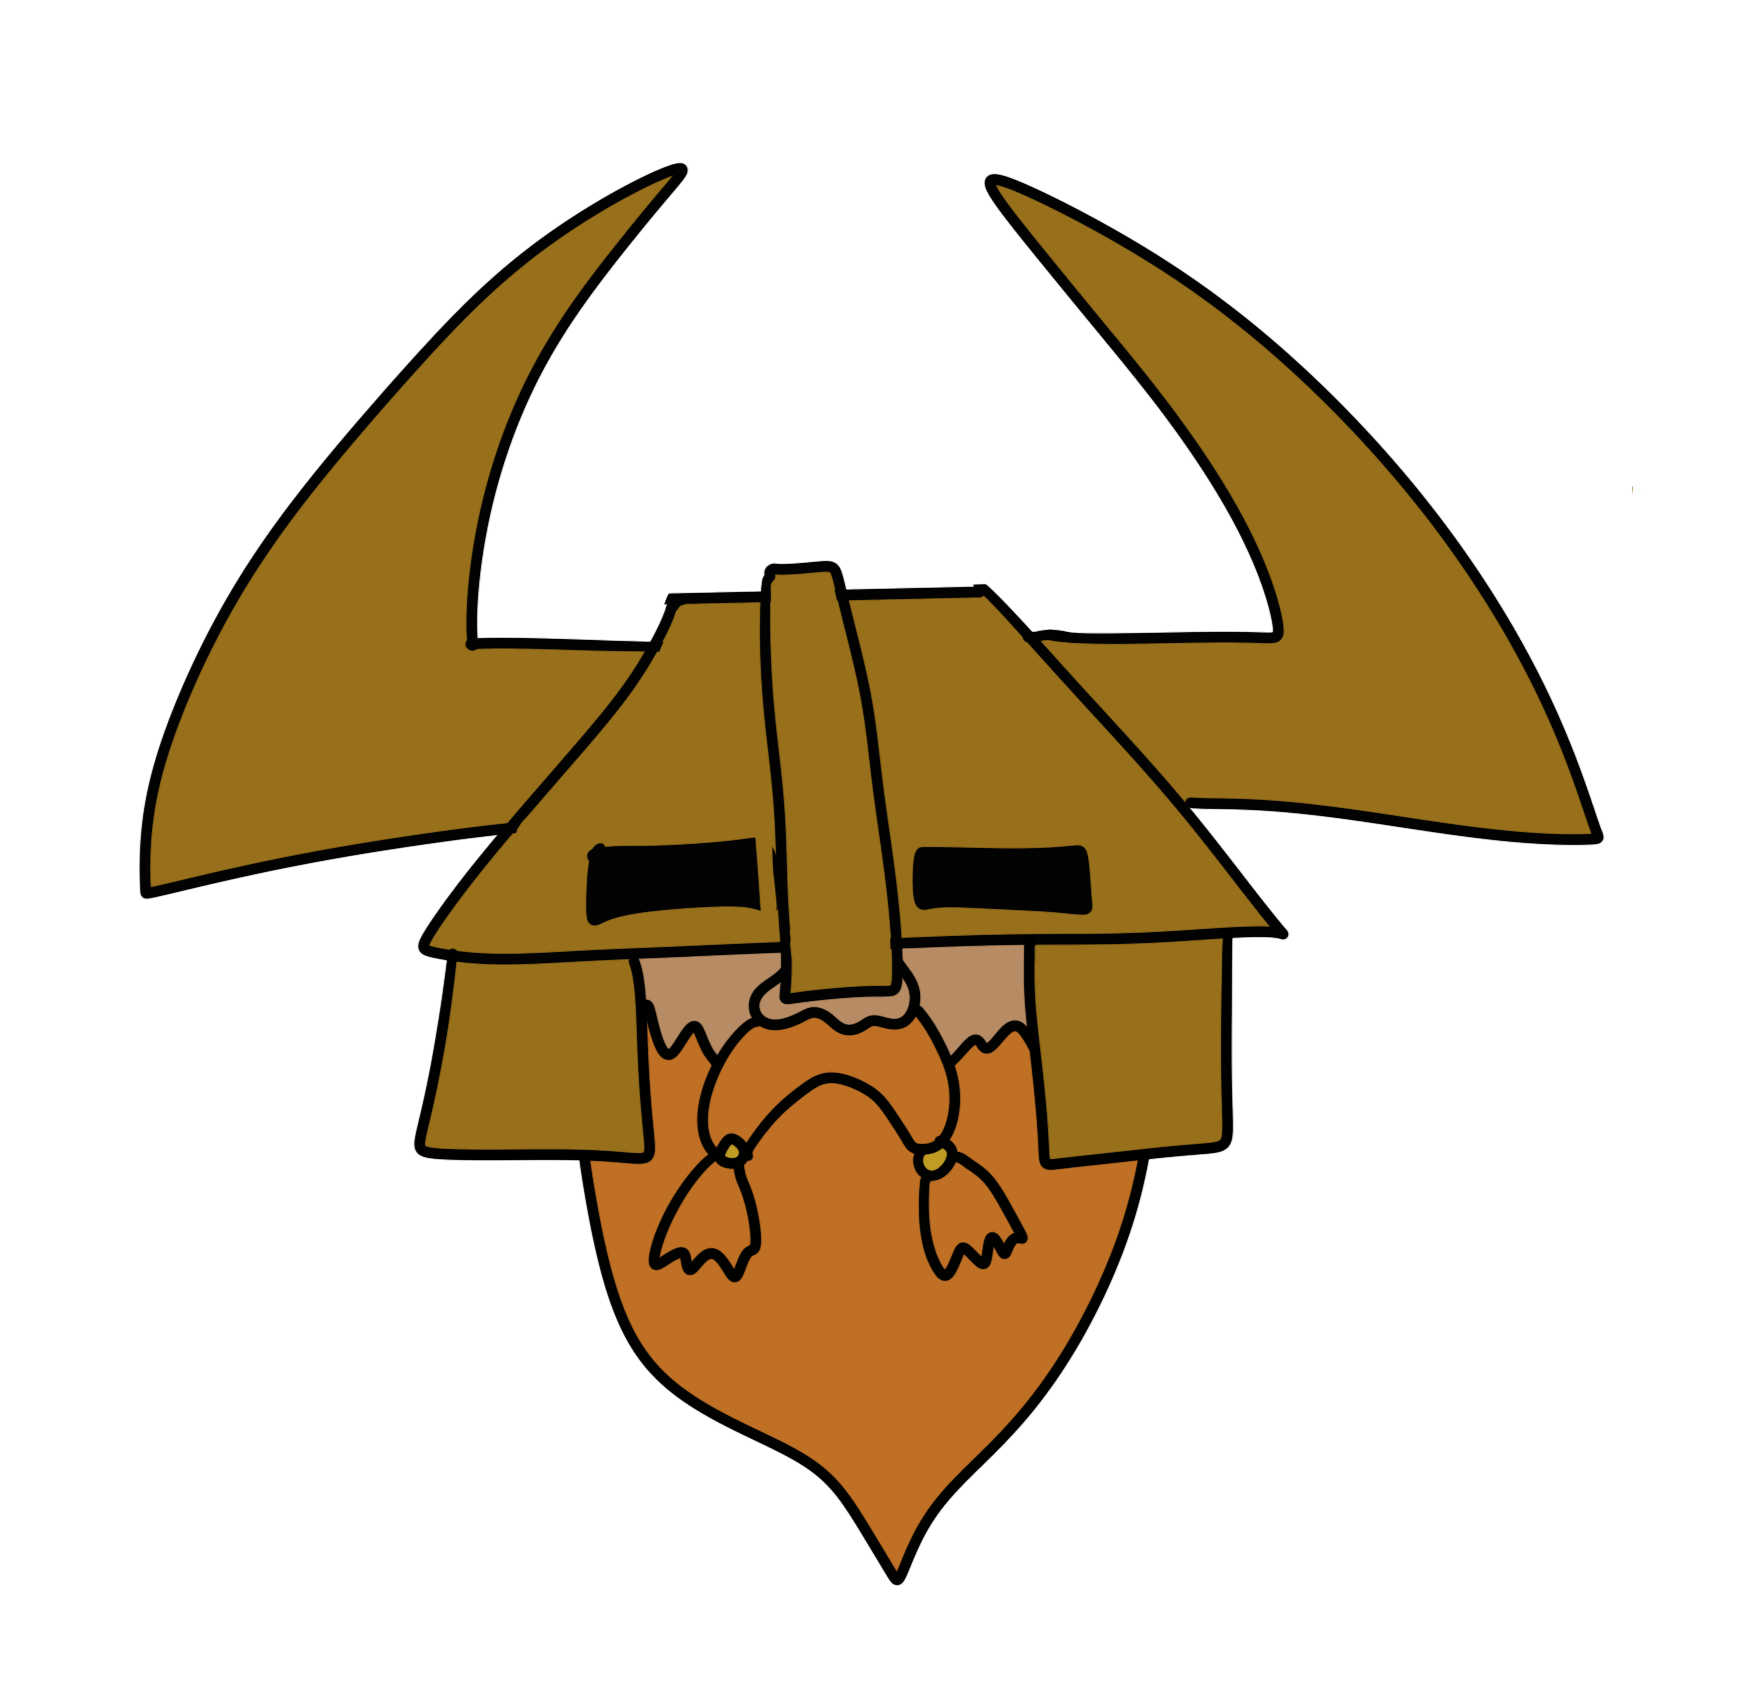 dwarf town logo, a dwarf with a viking helmet